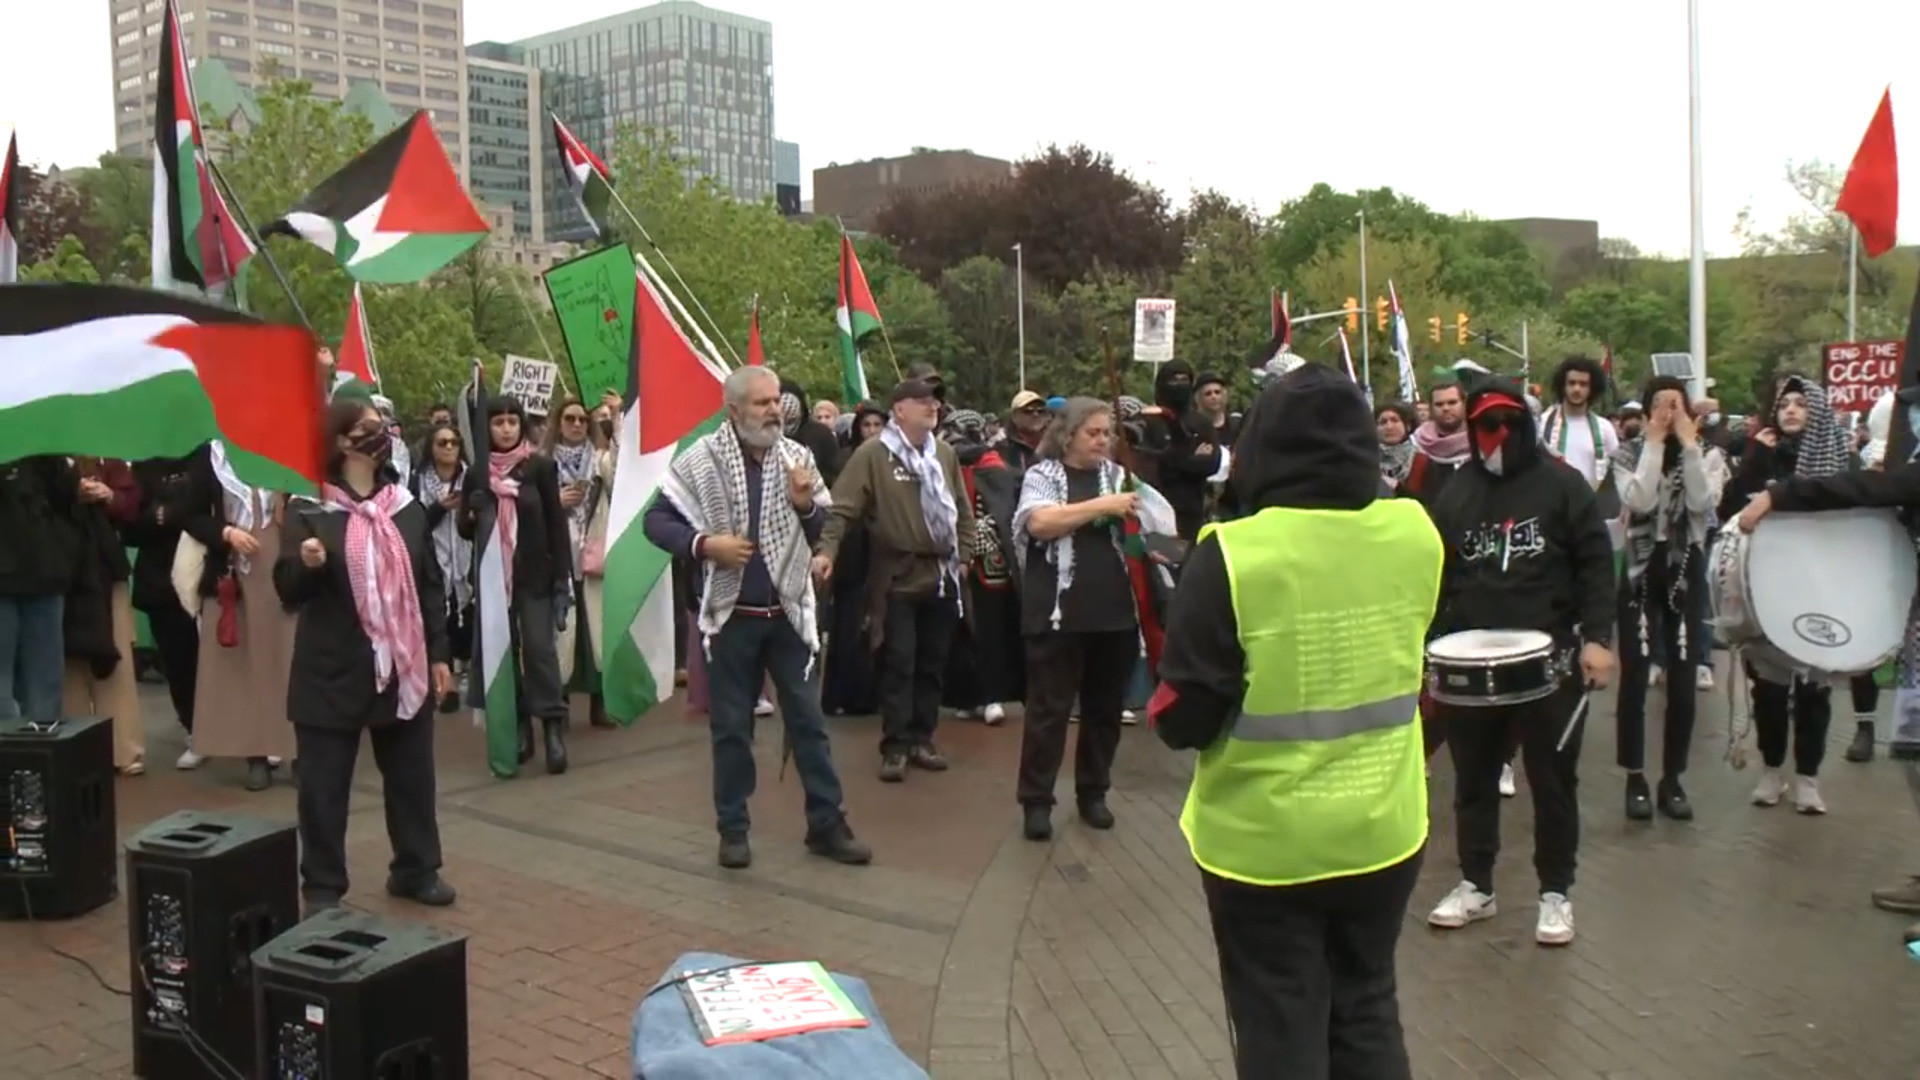 Pro-Palestinian demonstration at Ottawa City Hall during Israel flag raising